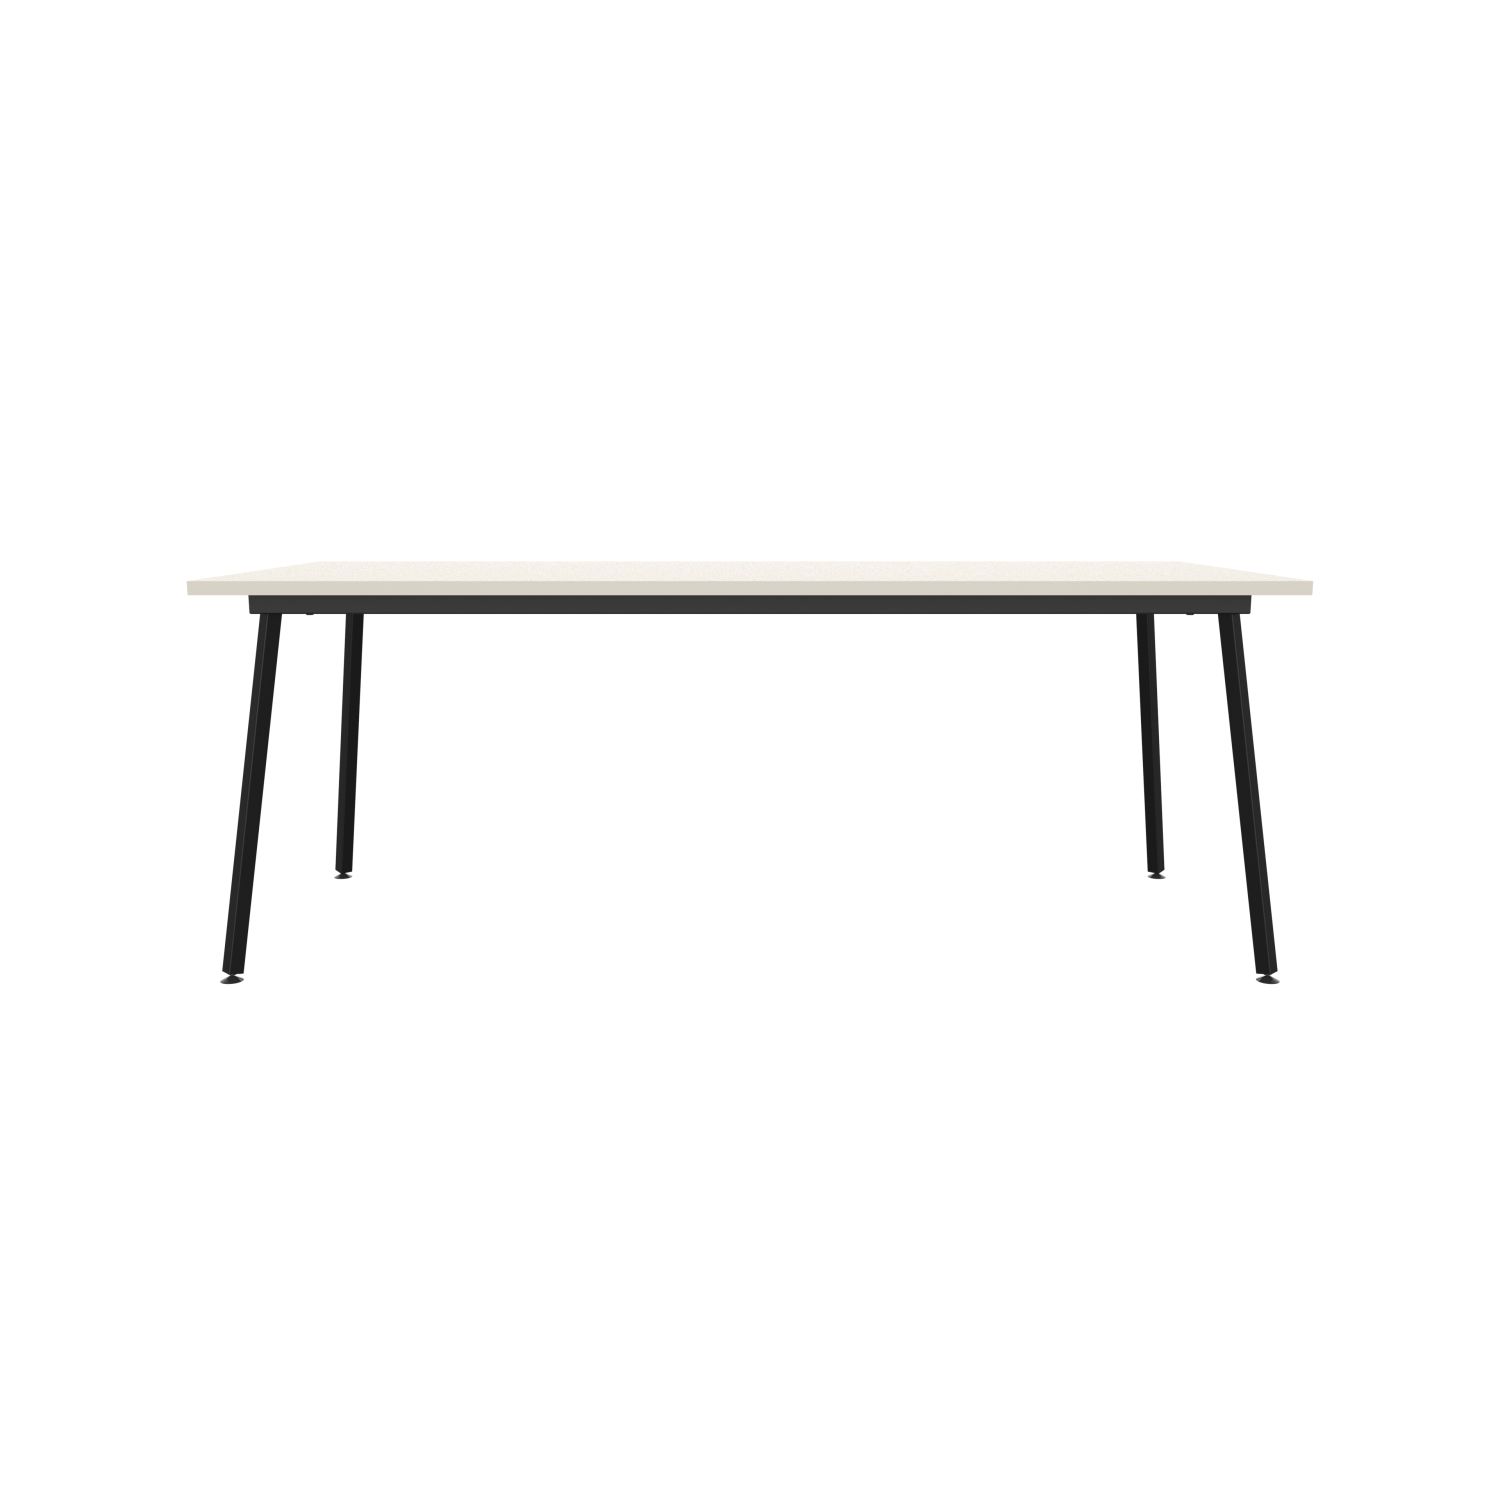 lensvelt maarten baas table fixed height 80x200 table top 26 mm top melamine boring grey edge abs boring grey black frame ral9005